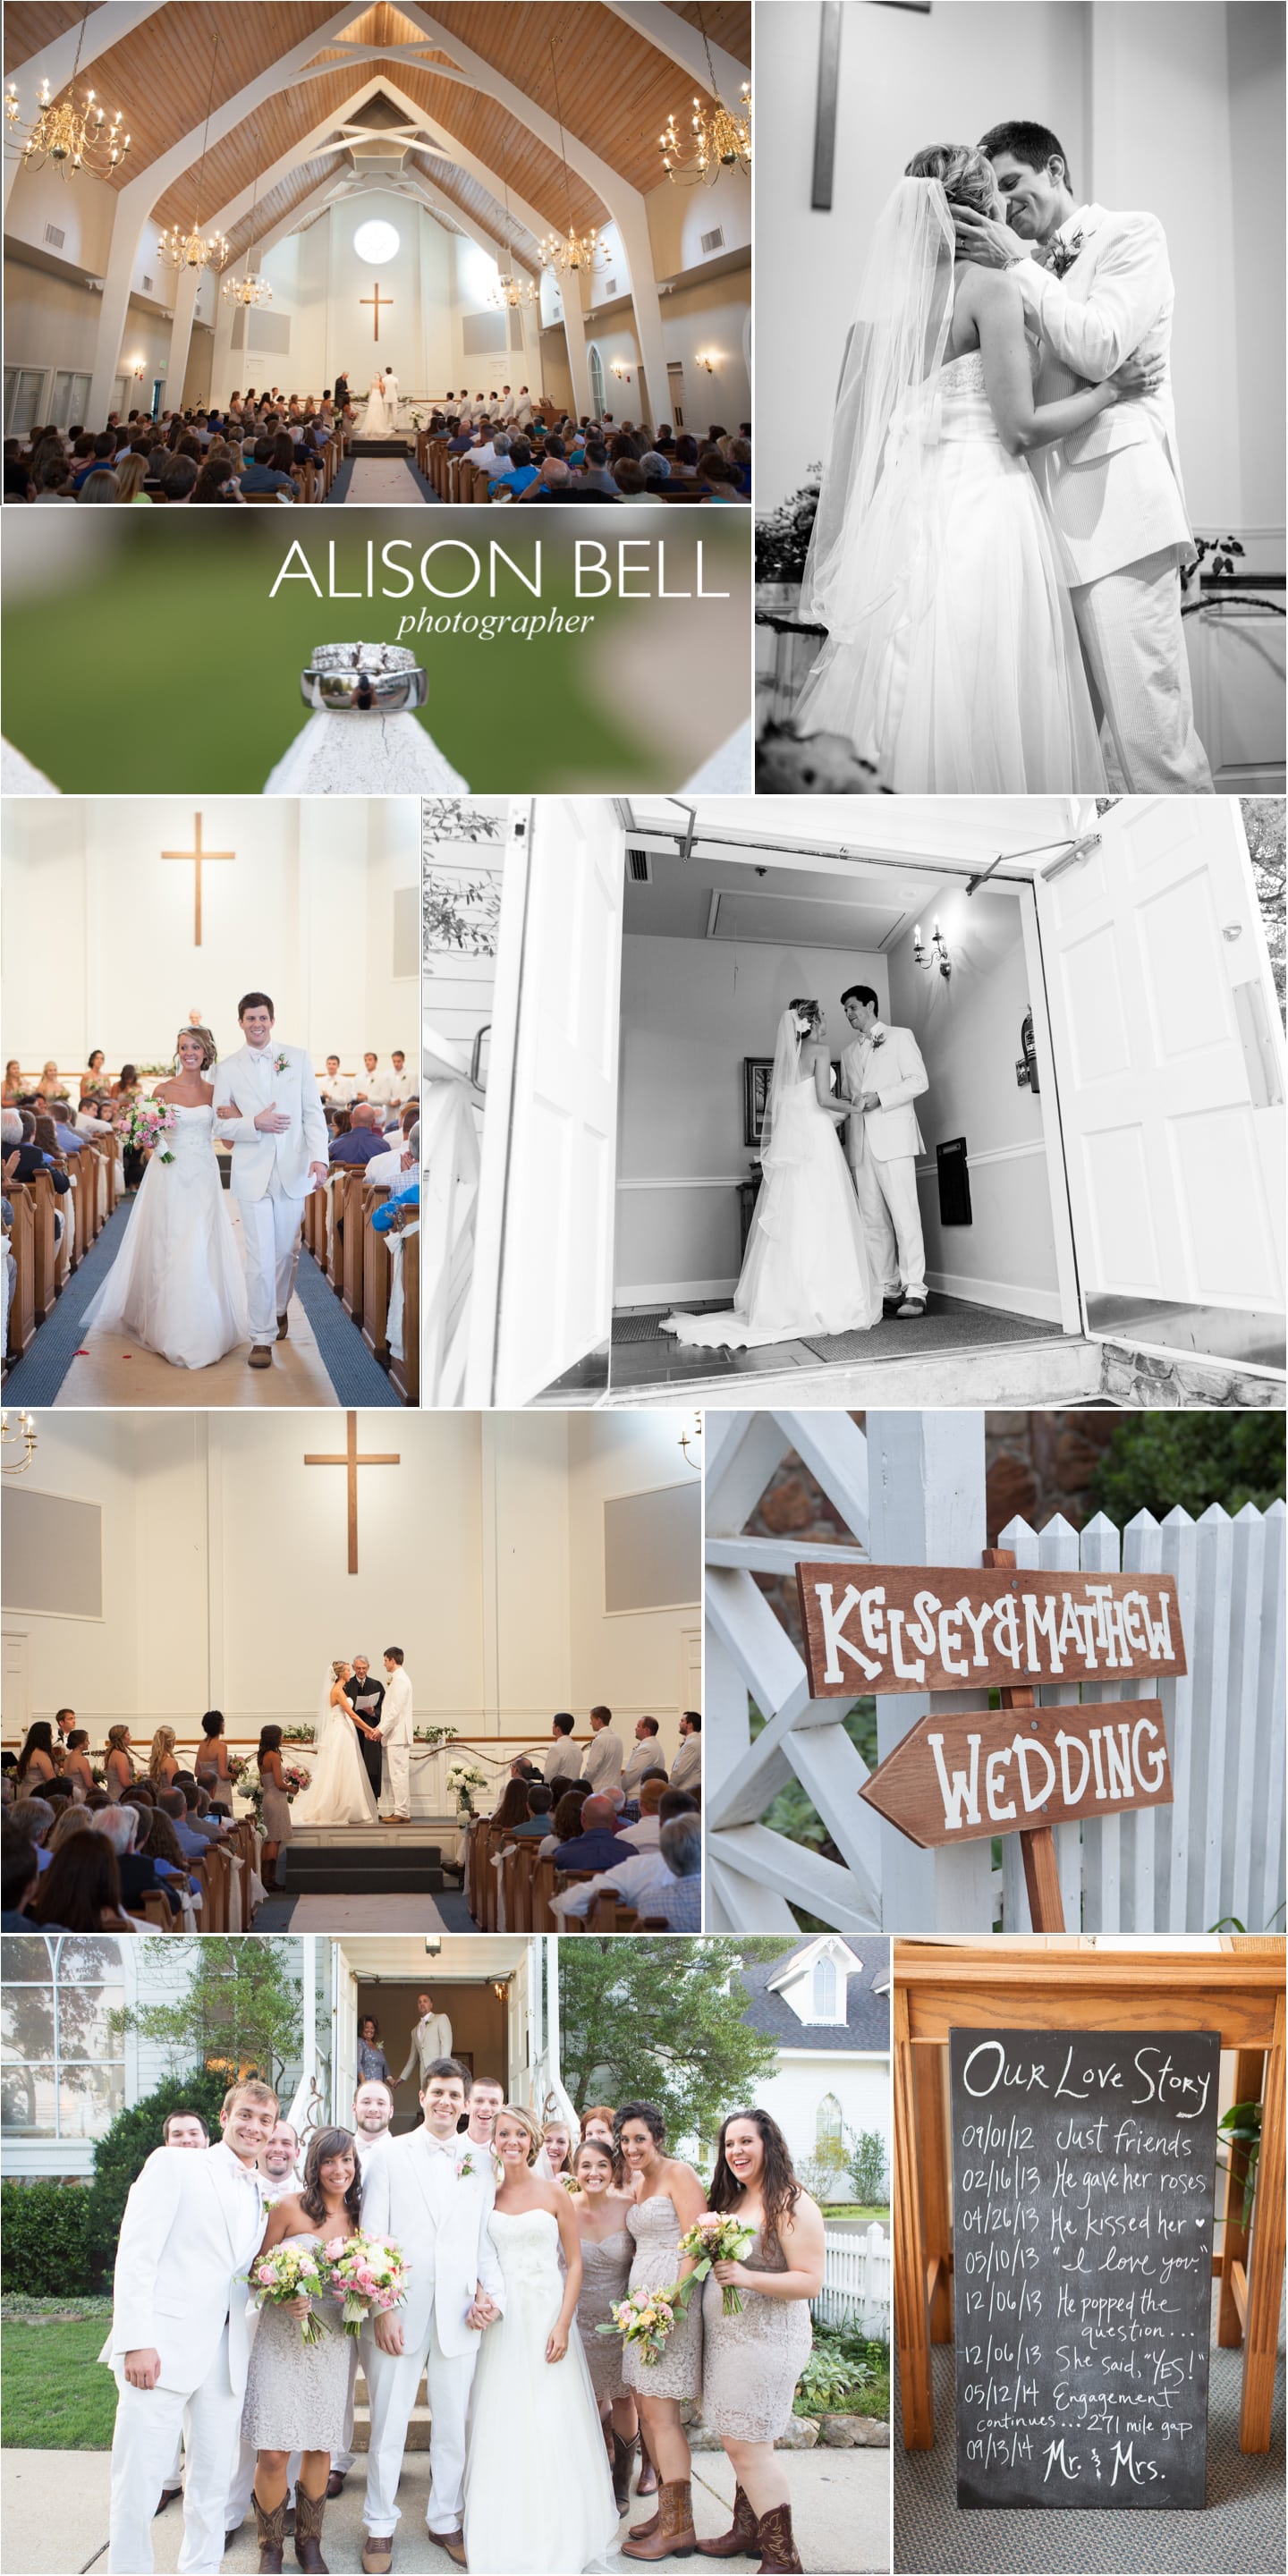 Altadena Valley Church wedding Photos, altar , wood sign, fence post, doors,  dress, flowers